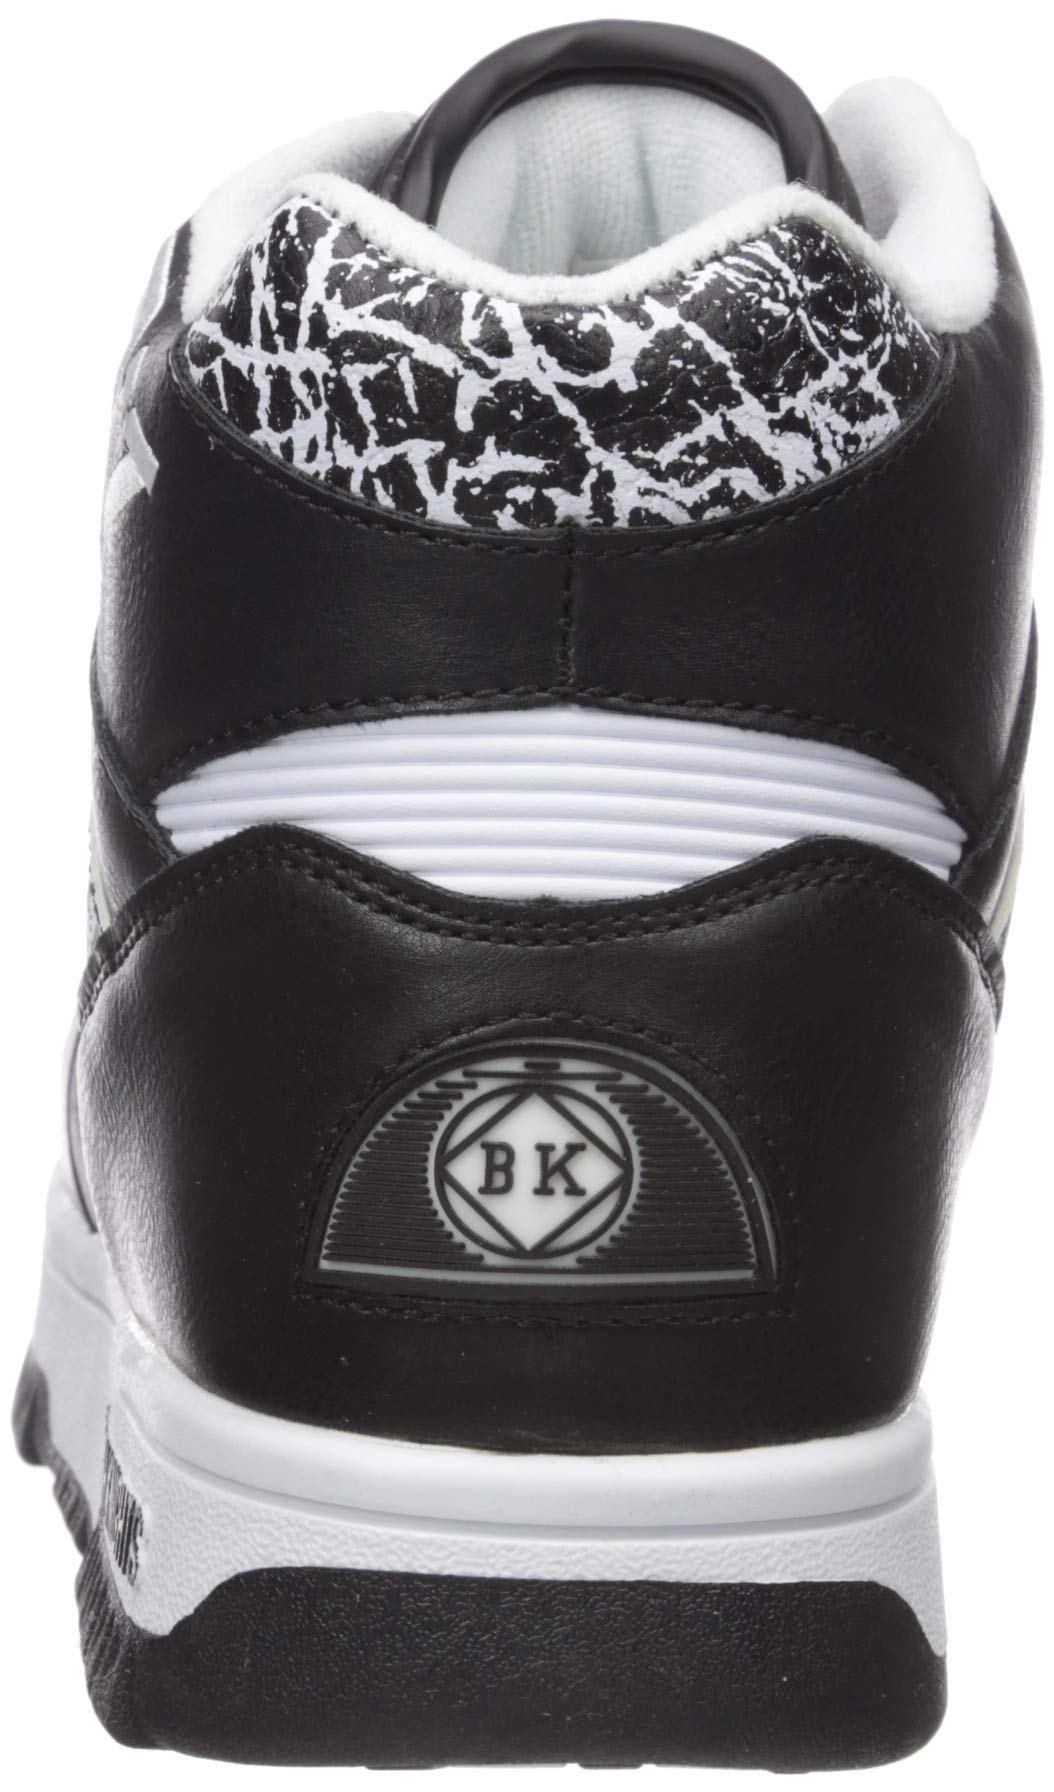 British Knights Men's Kings SL Fashion Sneaker Sneaker, Black/white/el, 13 medium